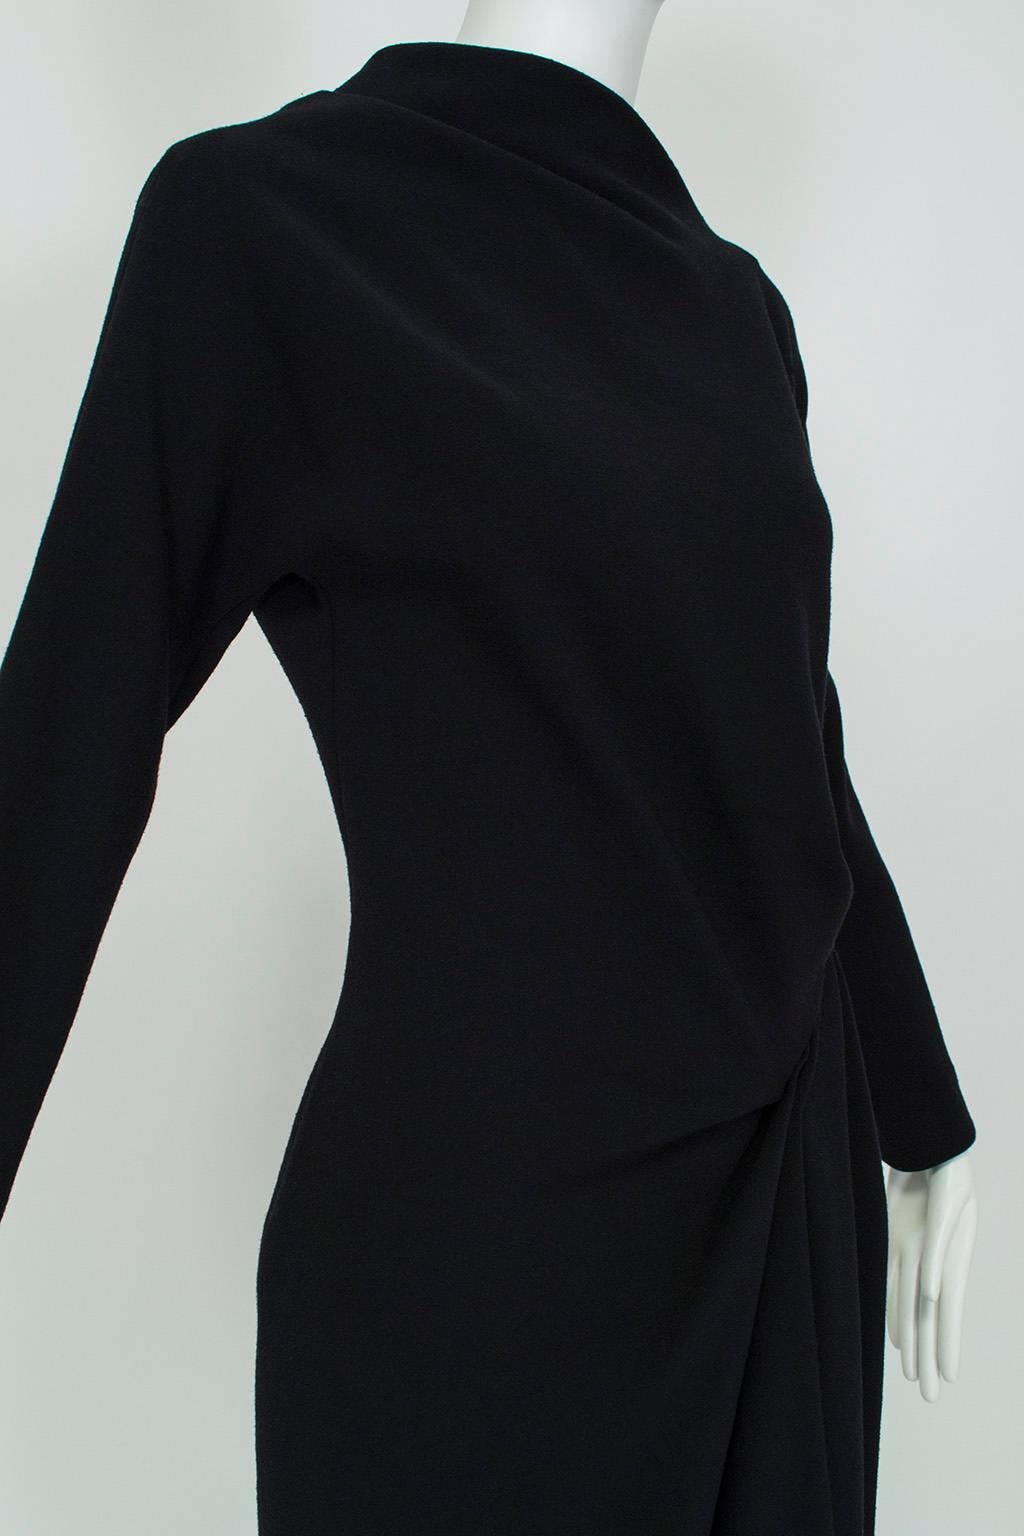 Alber Elbaz for Lanvin Draped Asymmetrical Cocktail Dress, 2012 1